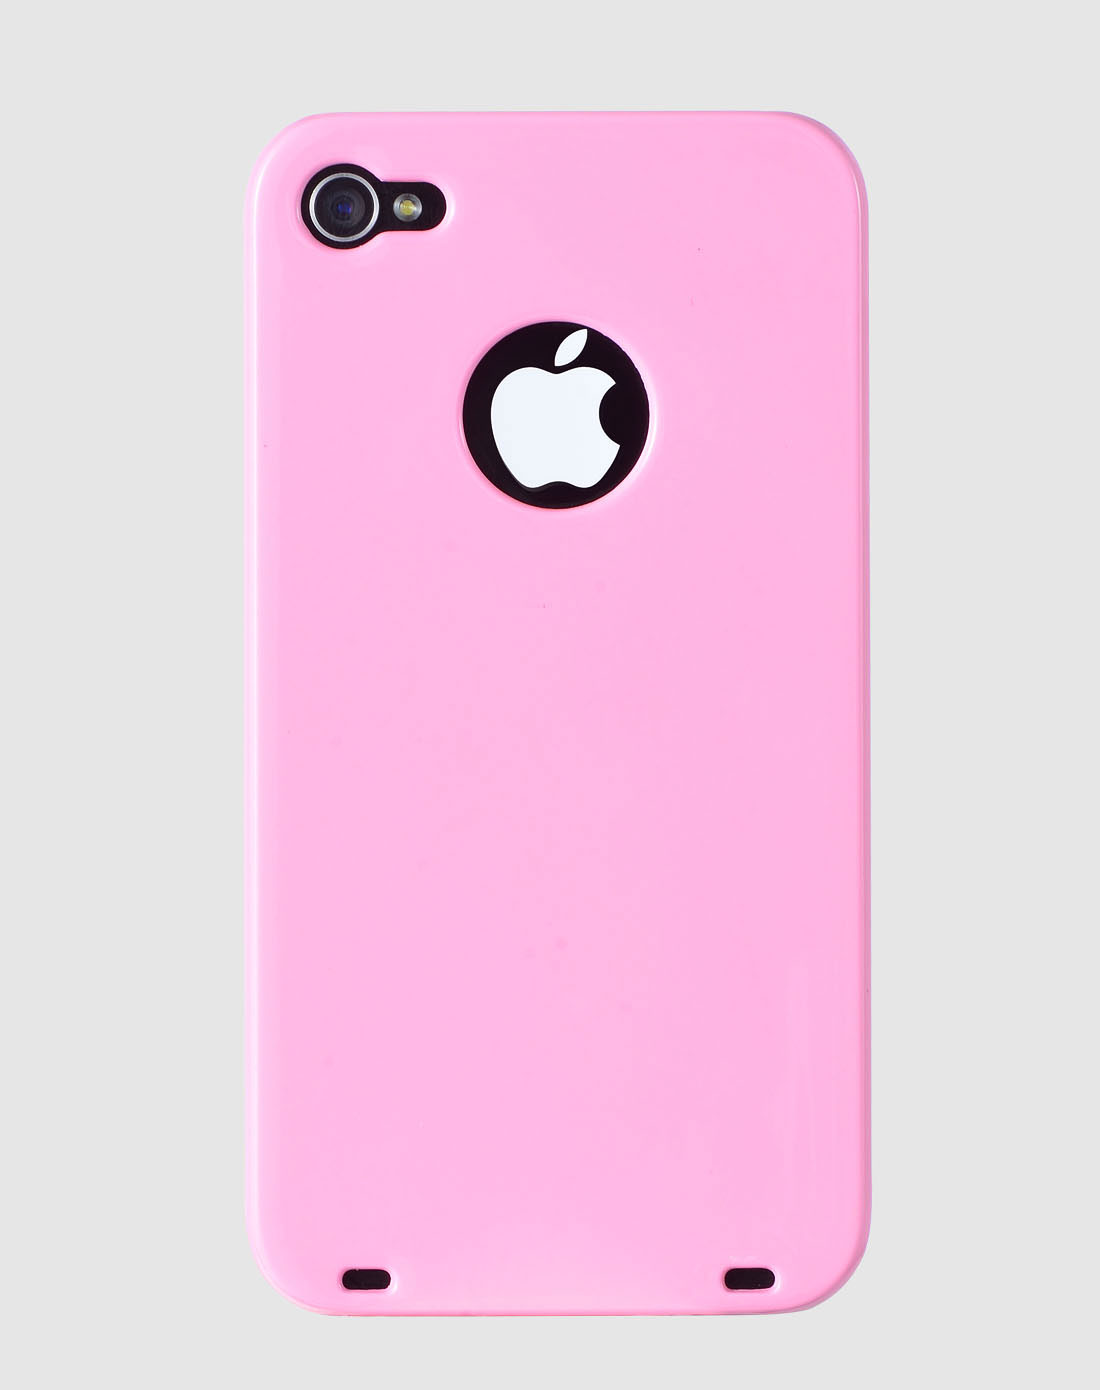 iphone4/4s 粉红色12星座之处女座手机壳